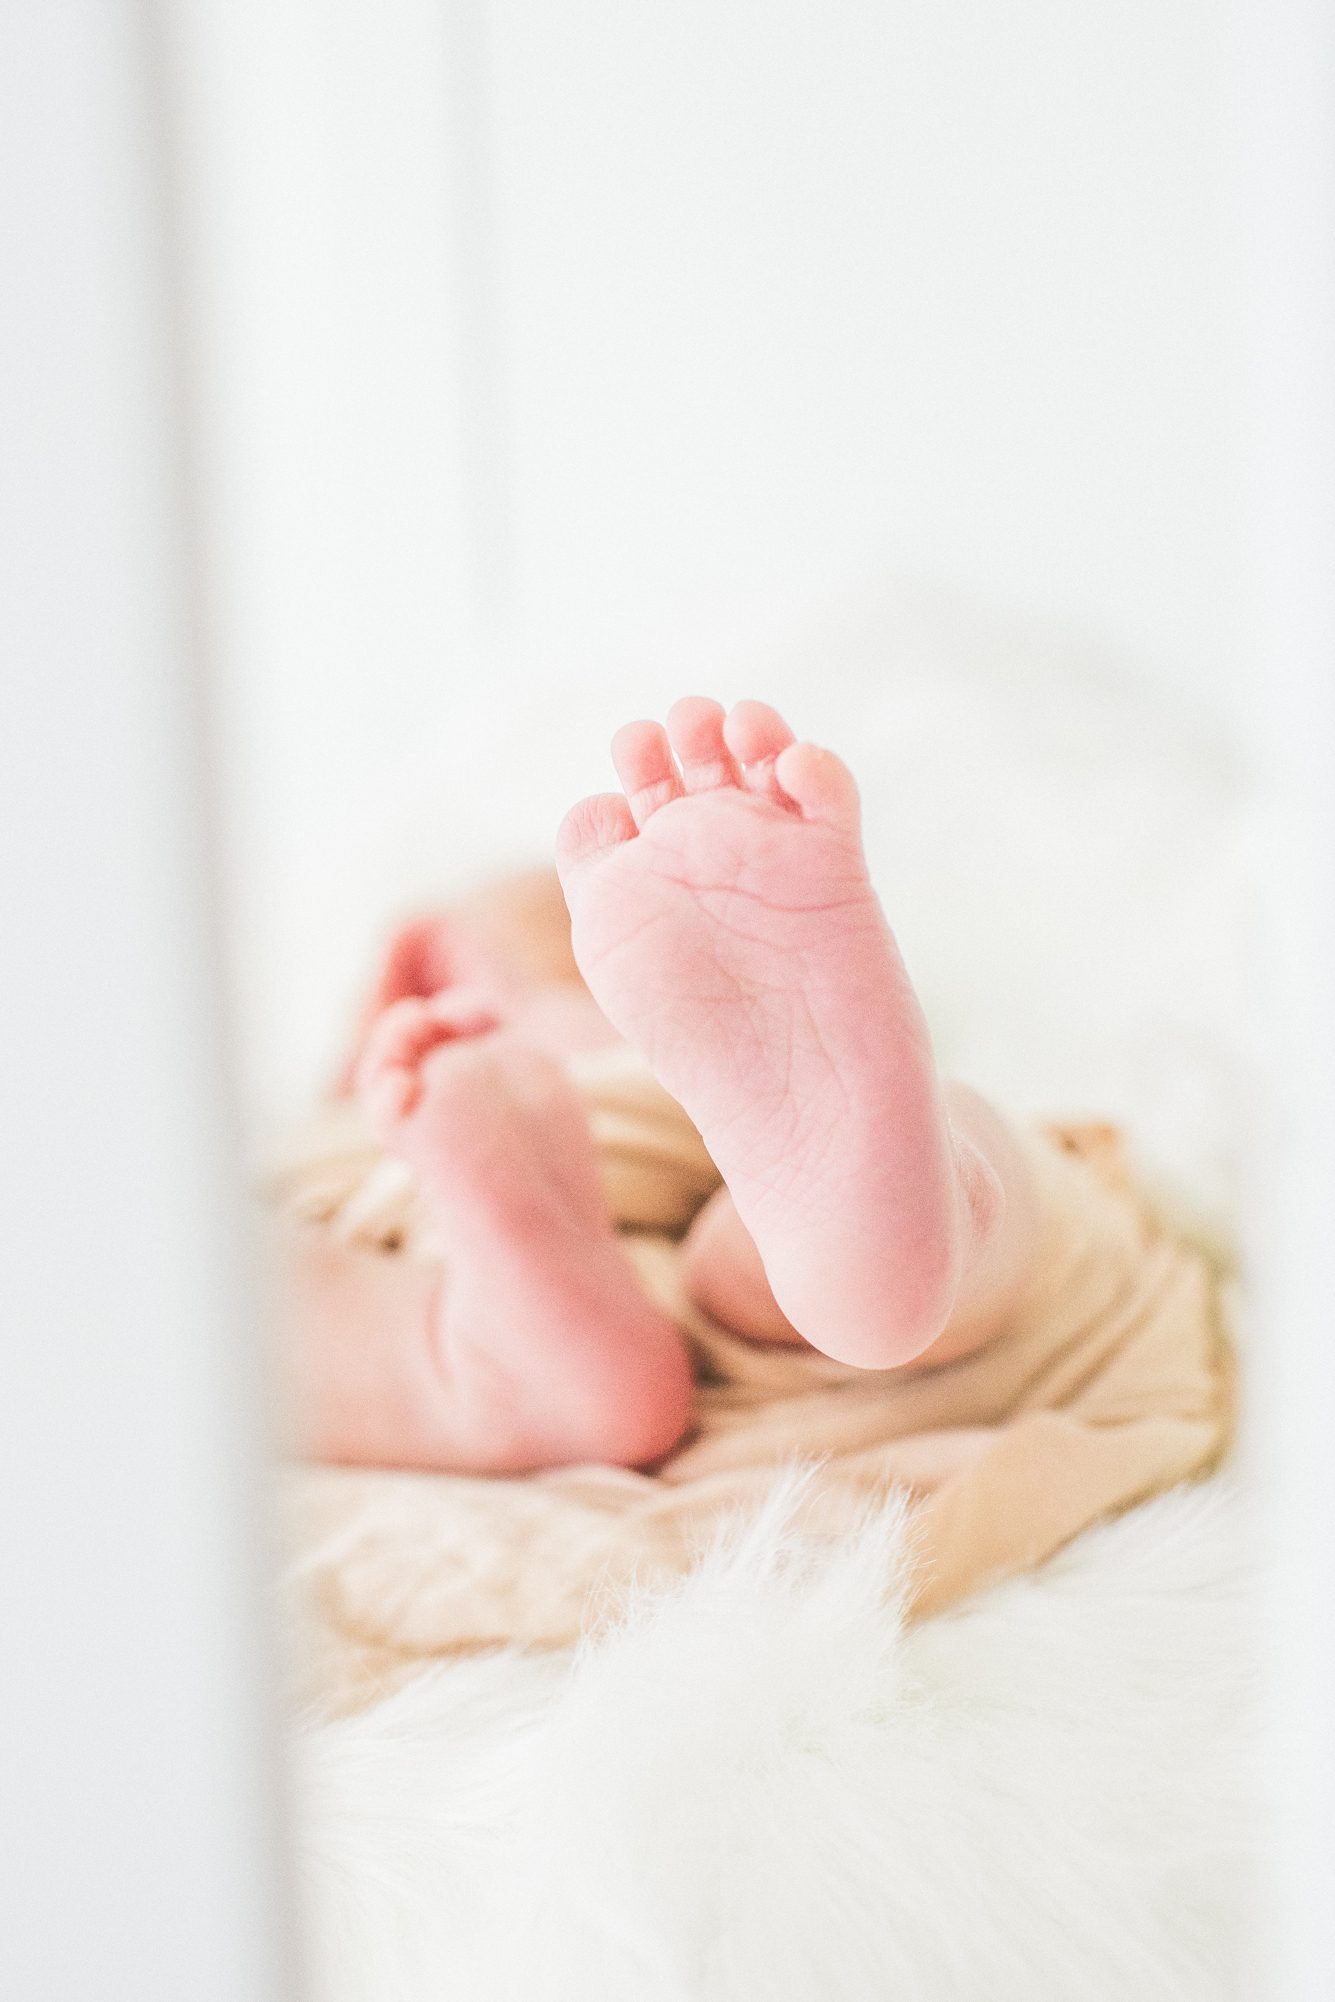 Closeup of newborn toes in crib. Photo by Washington DC newborn photographer, LRG Portraits.